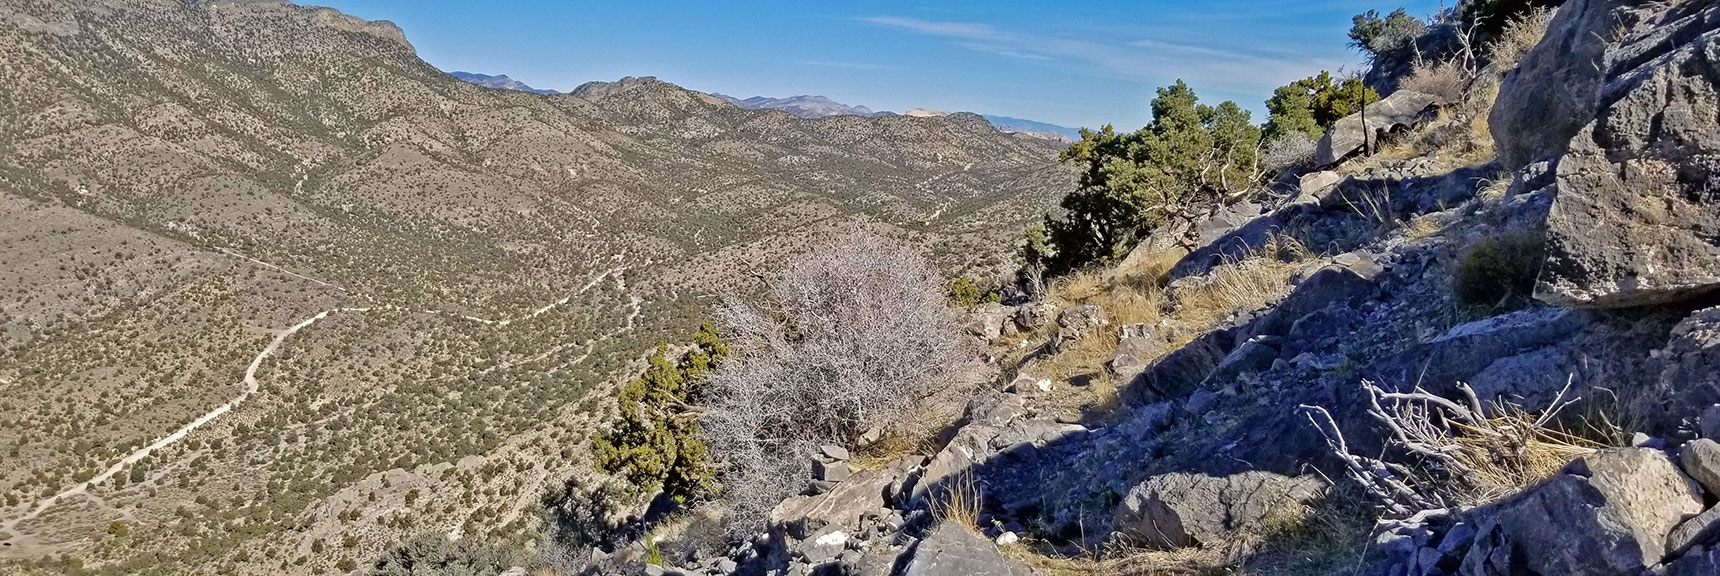 Navigating Around the First Bluff's Headwall, View Down to Mt. Potosi Canyon Rd | Potosi Mt. Summit via Western Cliffs Ridgeline, Spring Mountains, Nevada